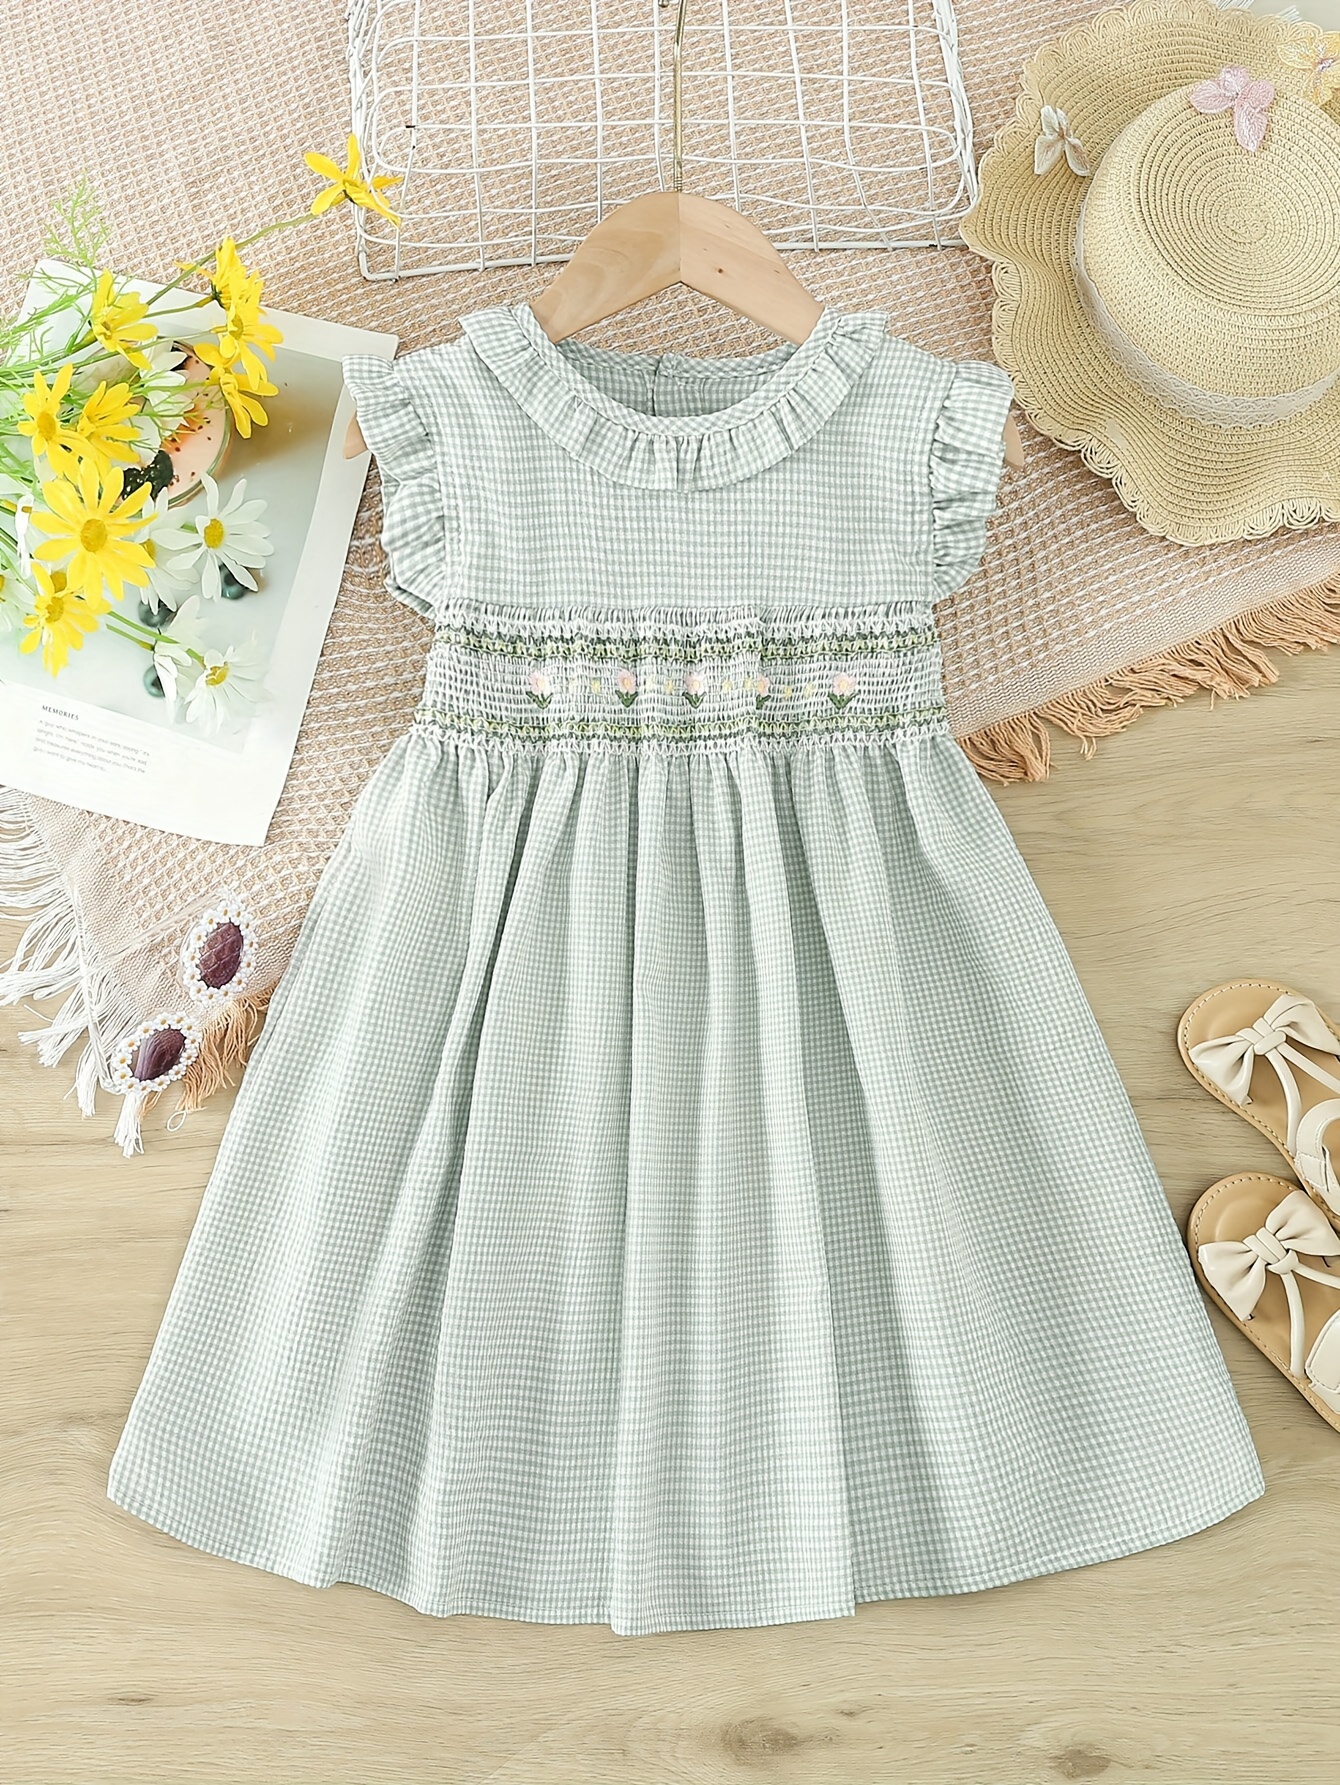 Baby Girl Plaid Fashion Sleeveless Cute Dress, Elegant Girls Summer Dress